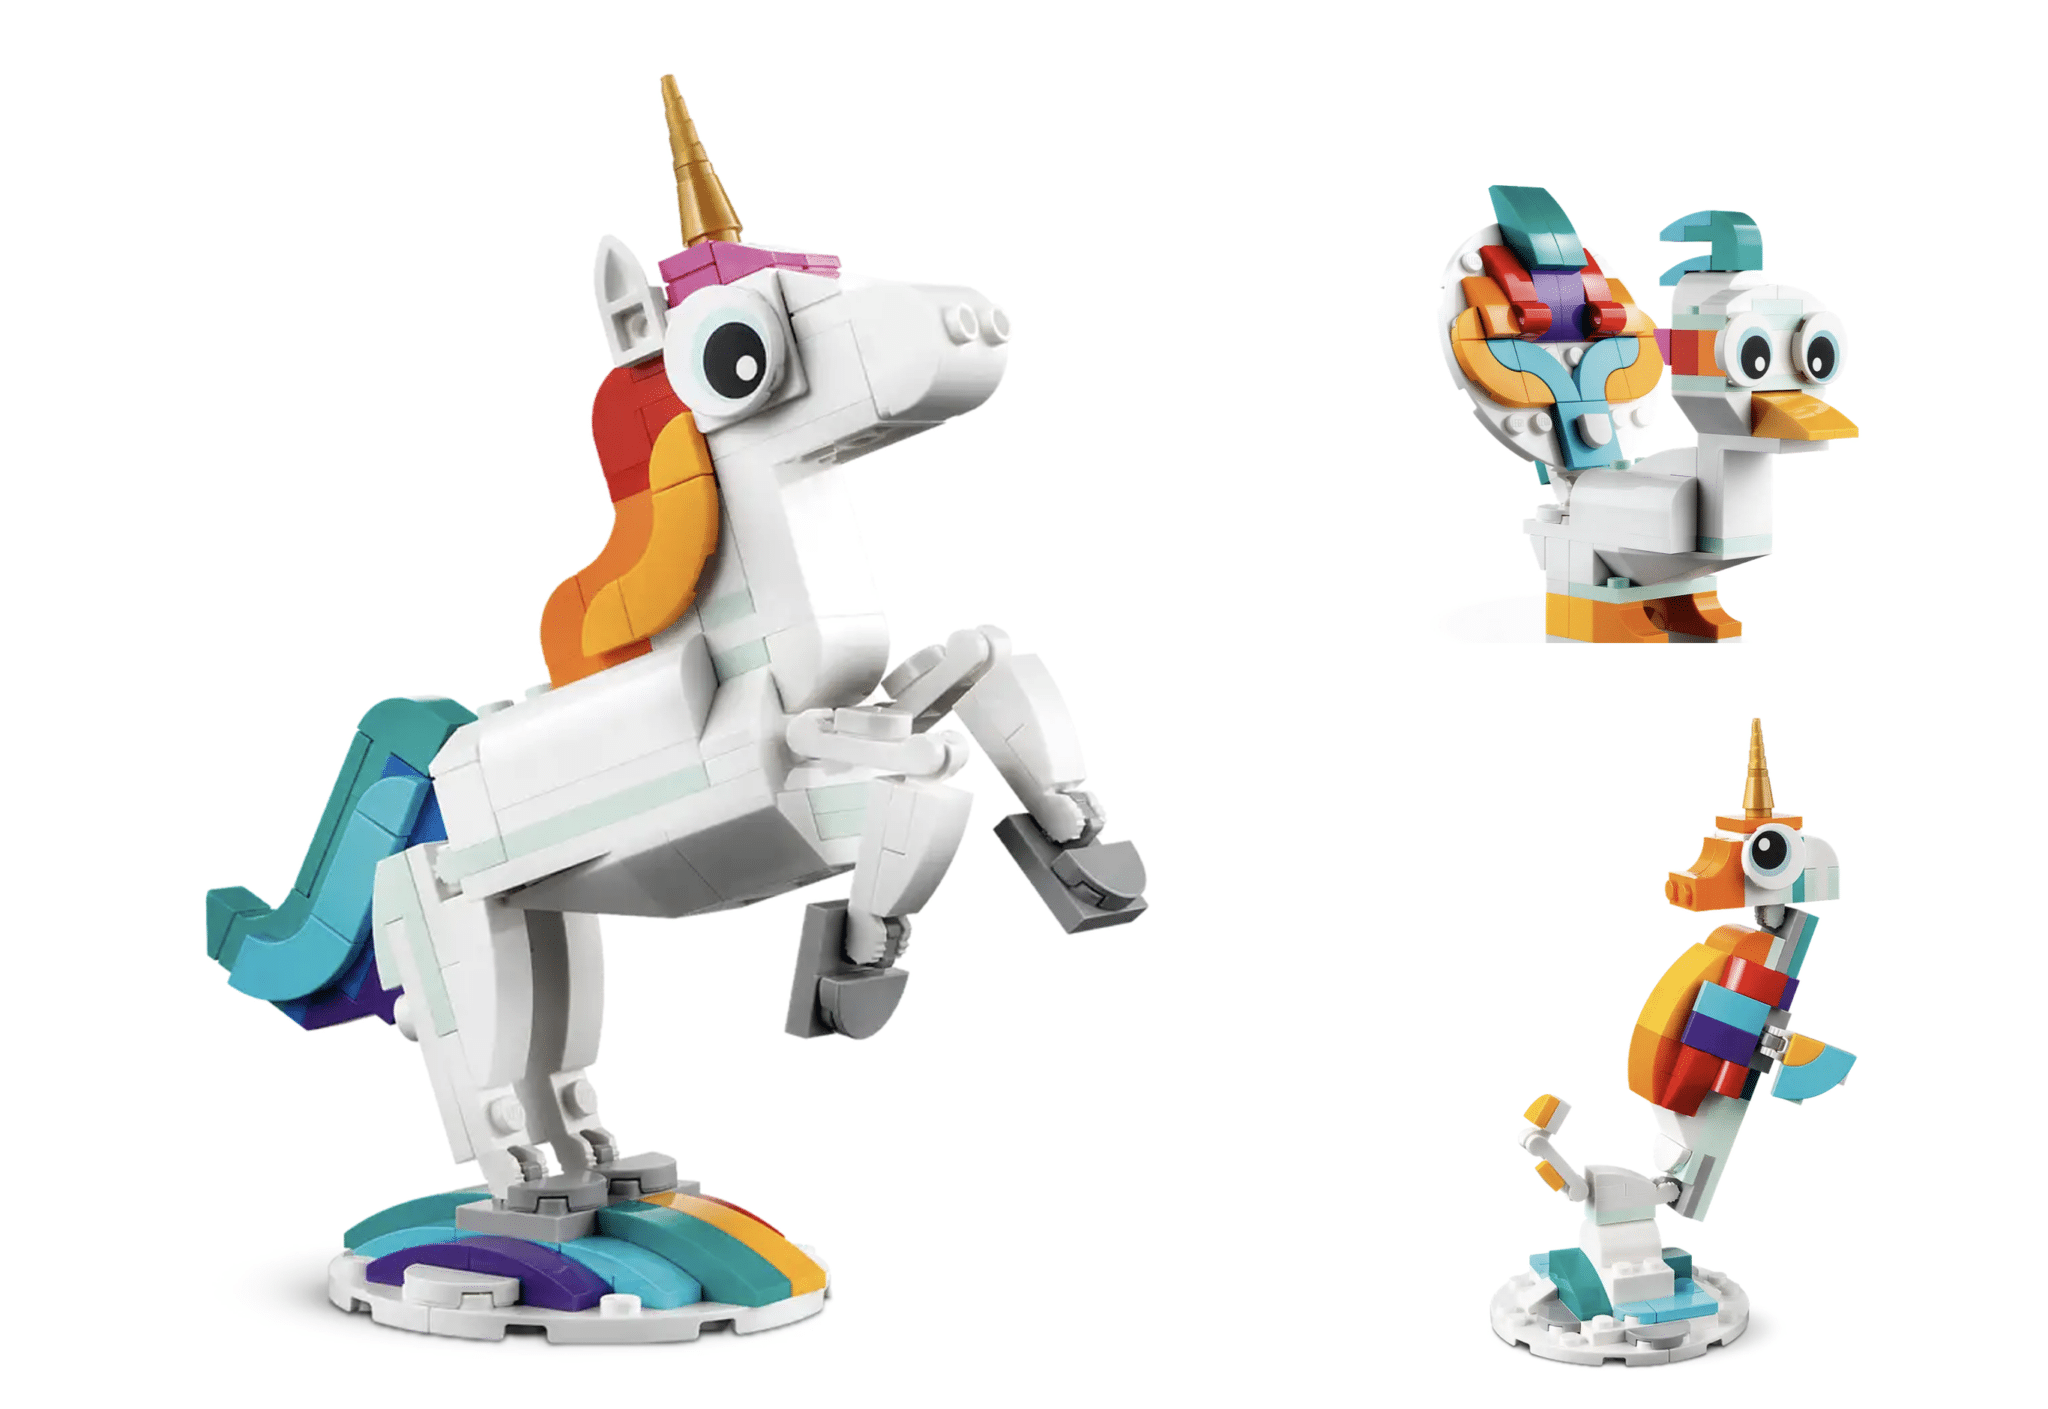 Magical Unicorn - Source: The LEGO Group